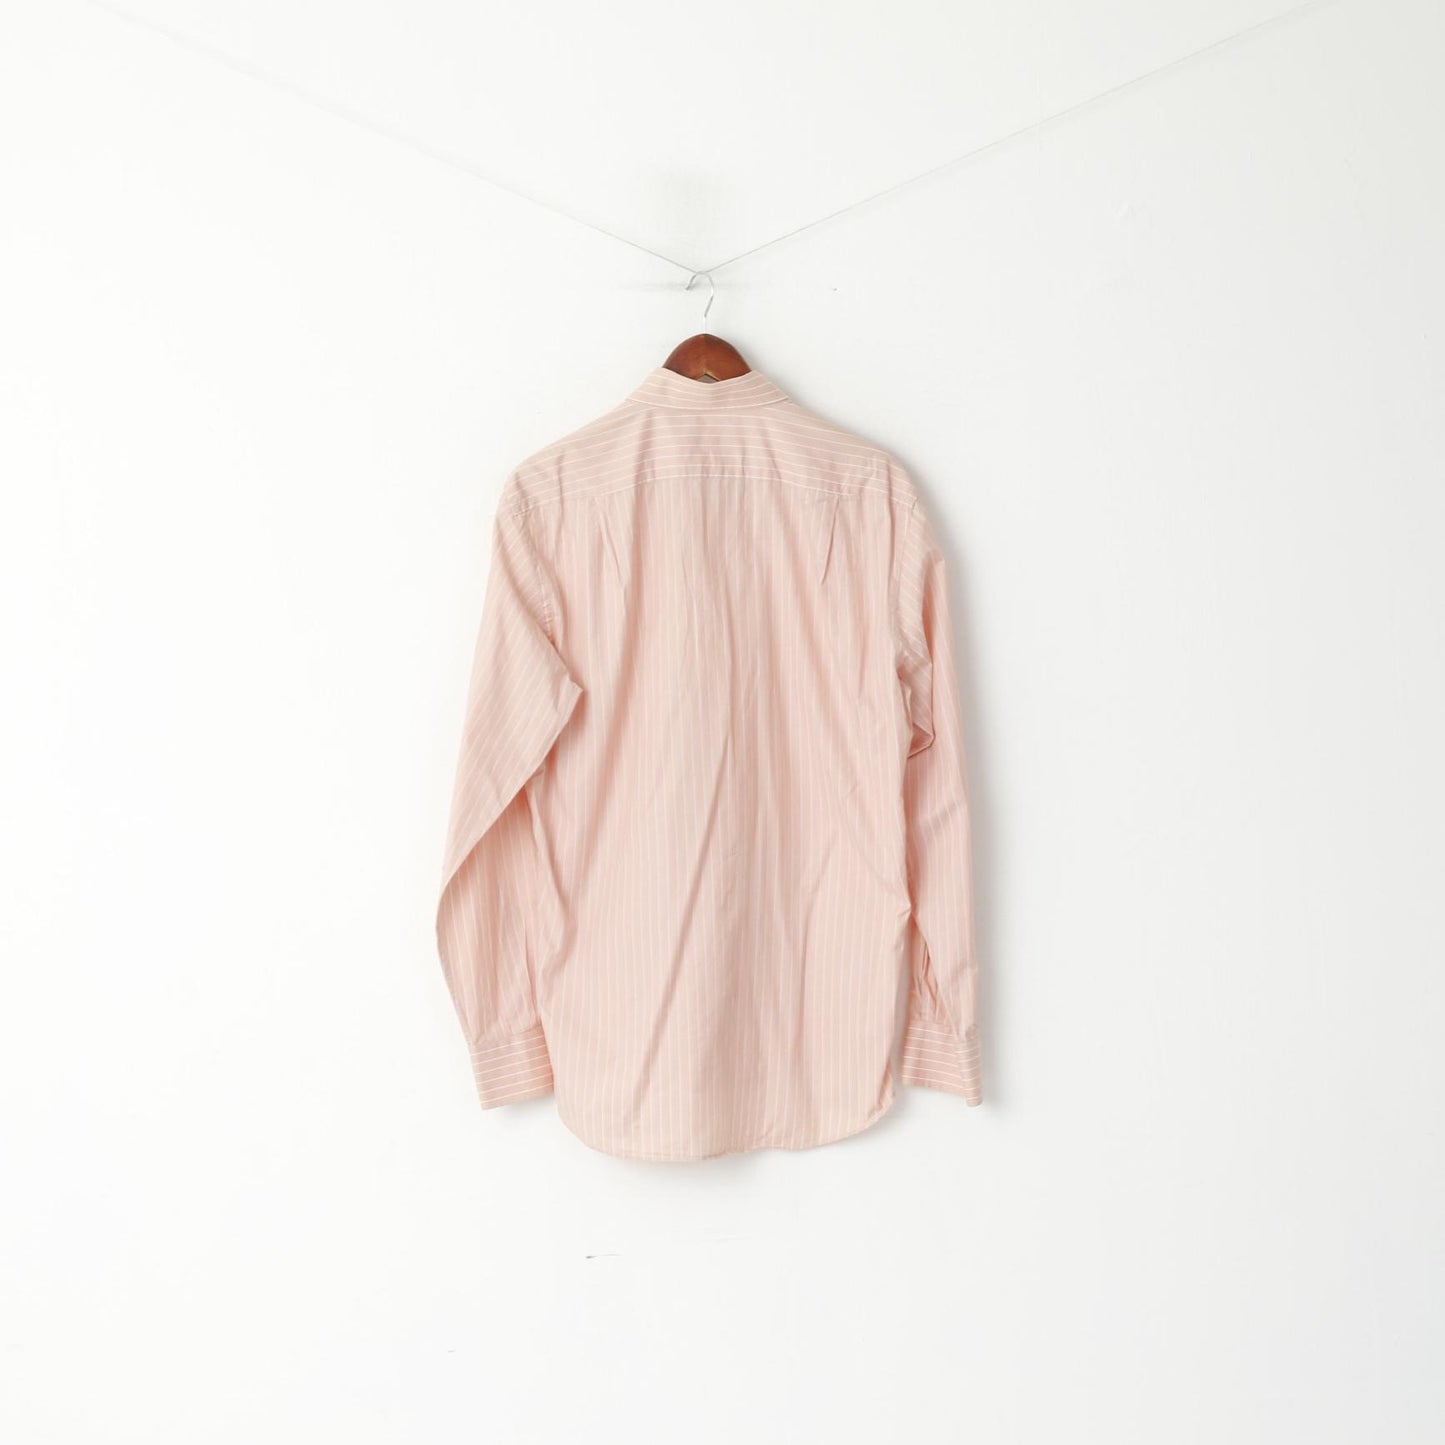 Hugo Boss Men 40 15.5 L Casual Shirt Light Pink Striped Cotton Long Sleeve Top